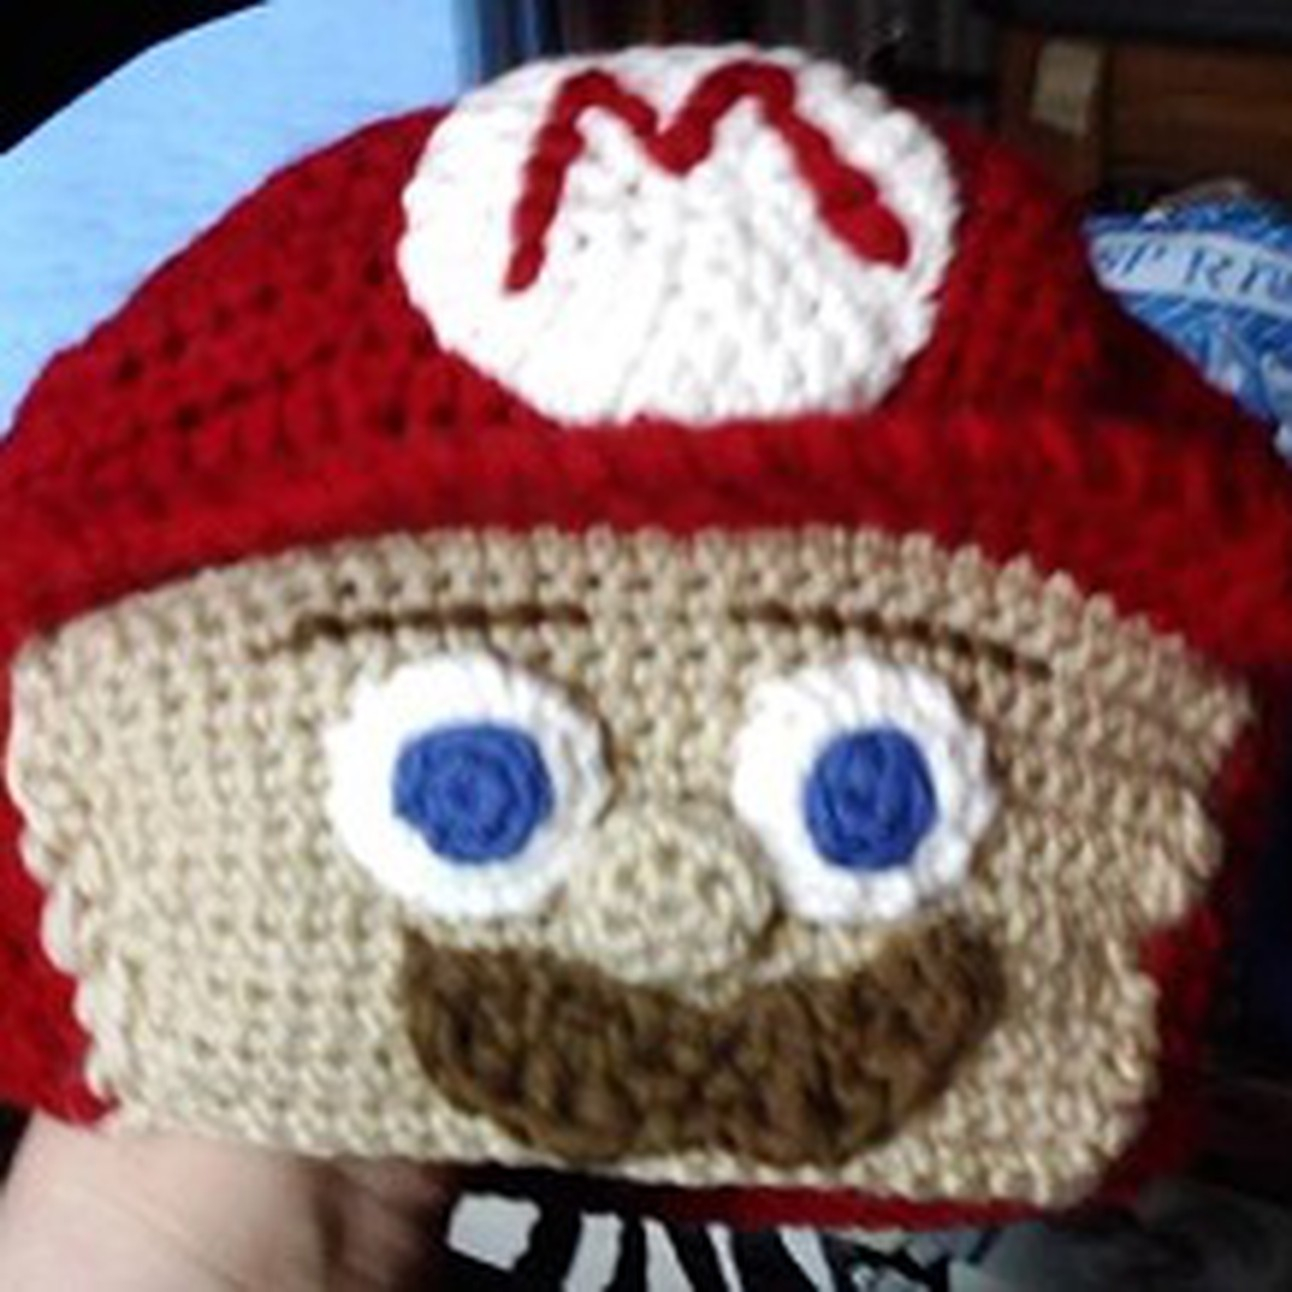 Yoshi Character Beanie Hat Crochet Pattern » cRAfterchick - Free